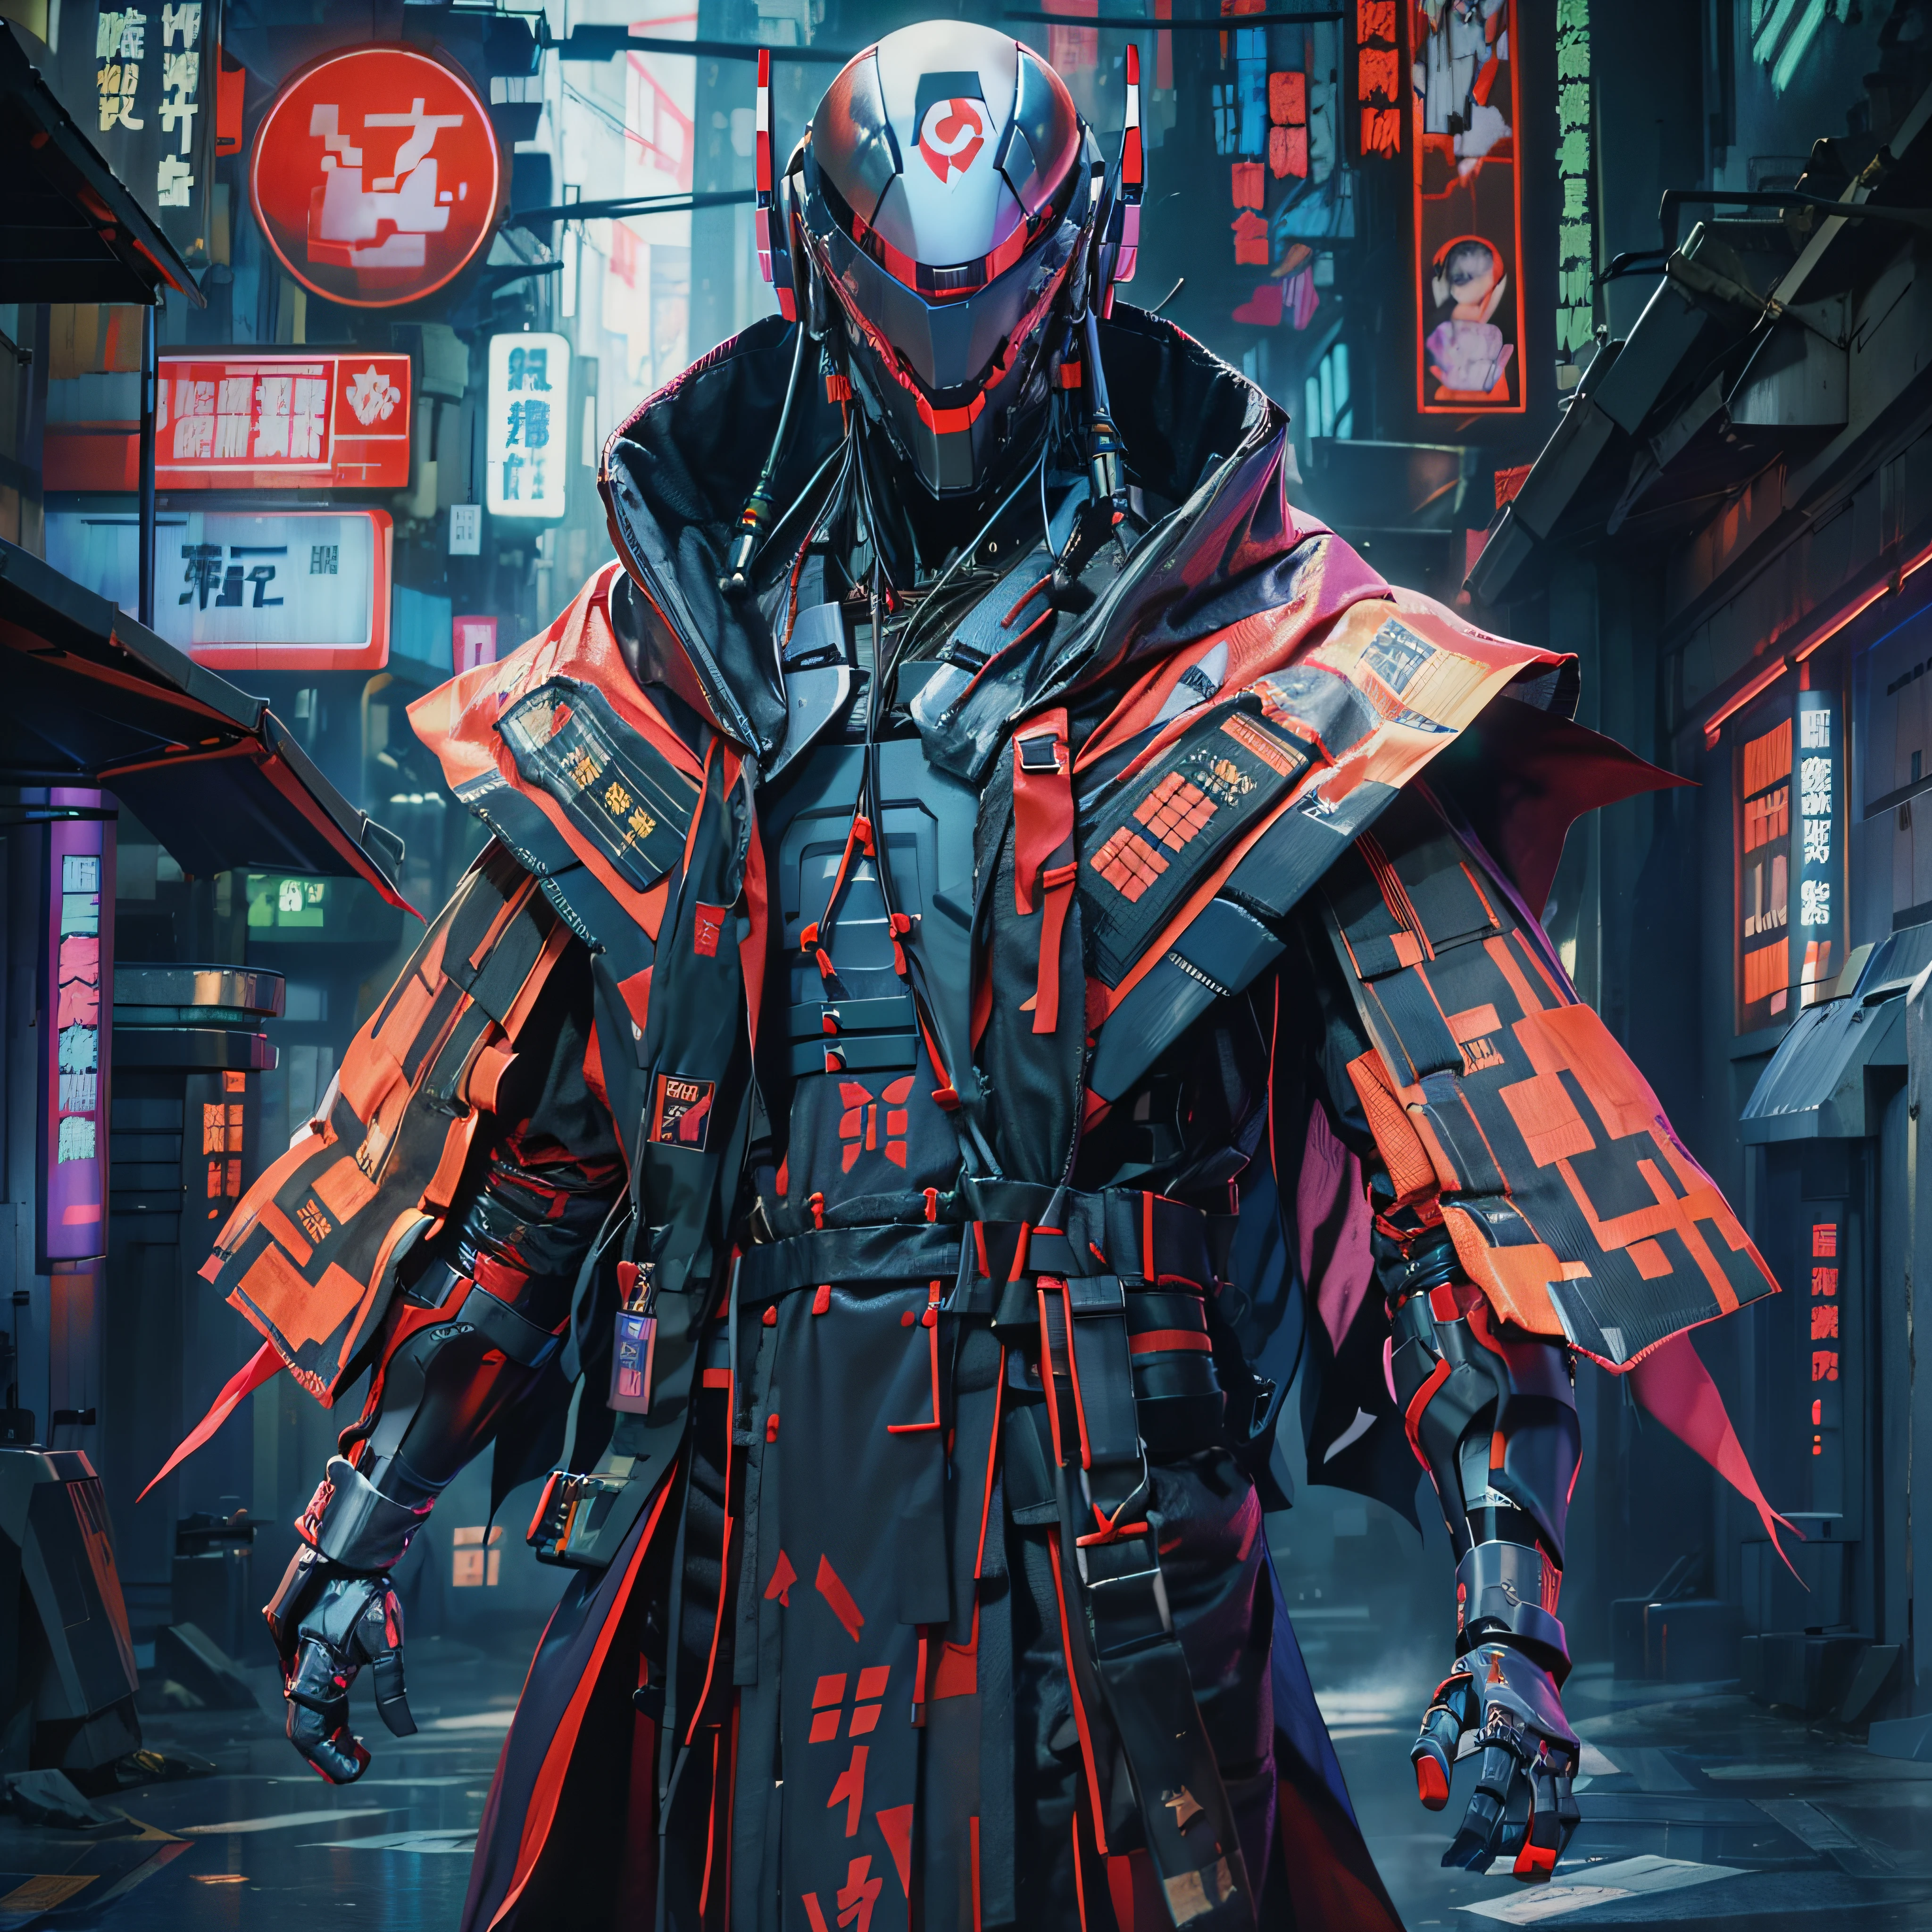 cyberfusion,Shinsengumi Haori assassin robot cyborg wearing robes cape,elite corporate security, cyberpunk shopping district